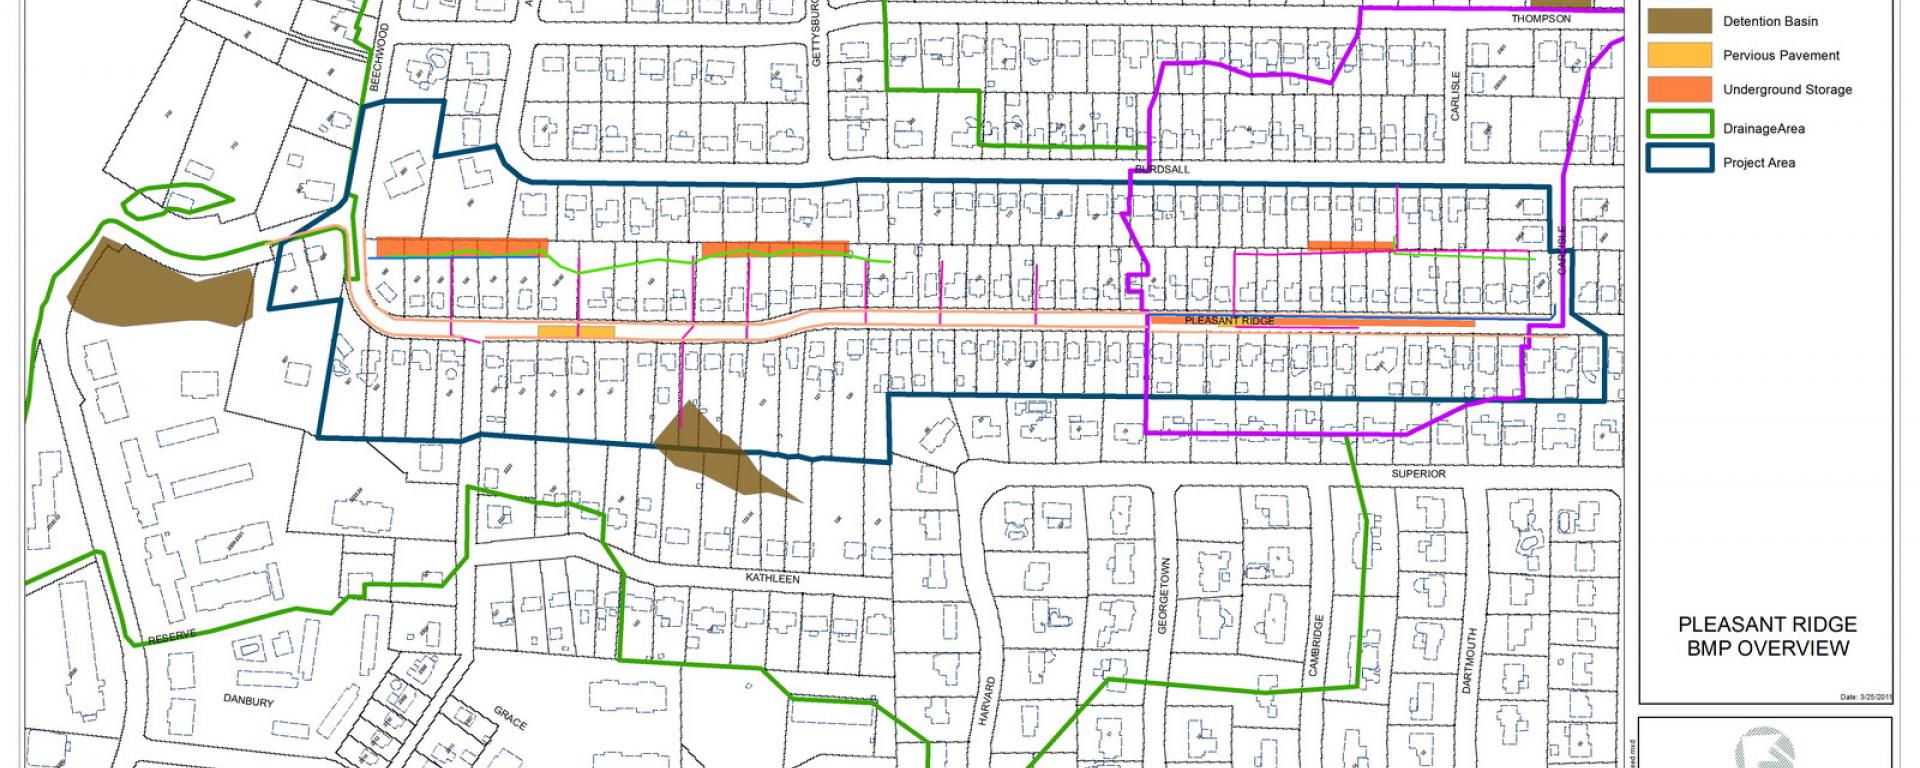 sewer plans rendering